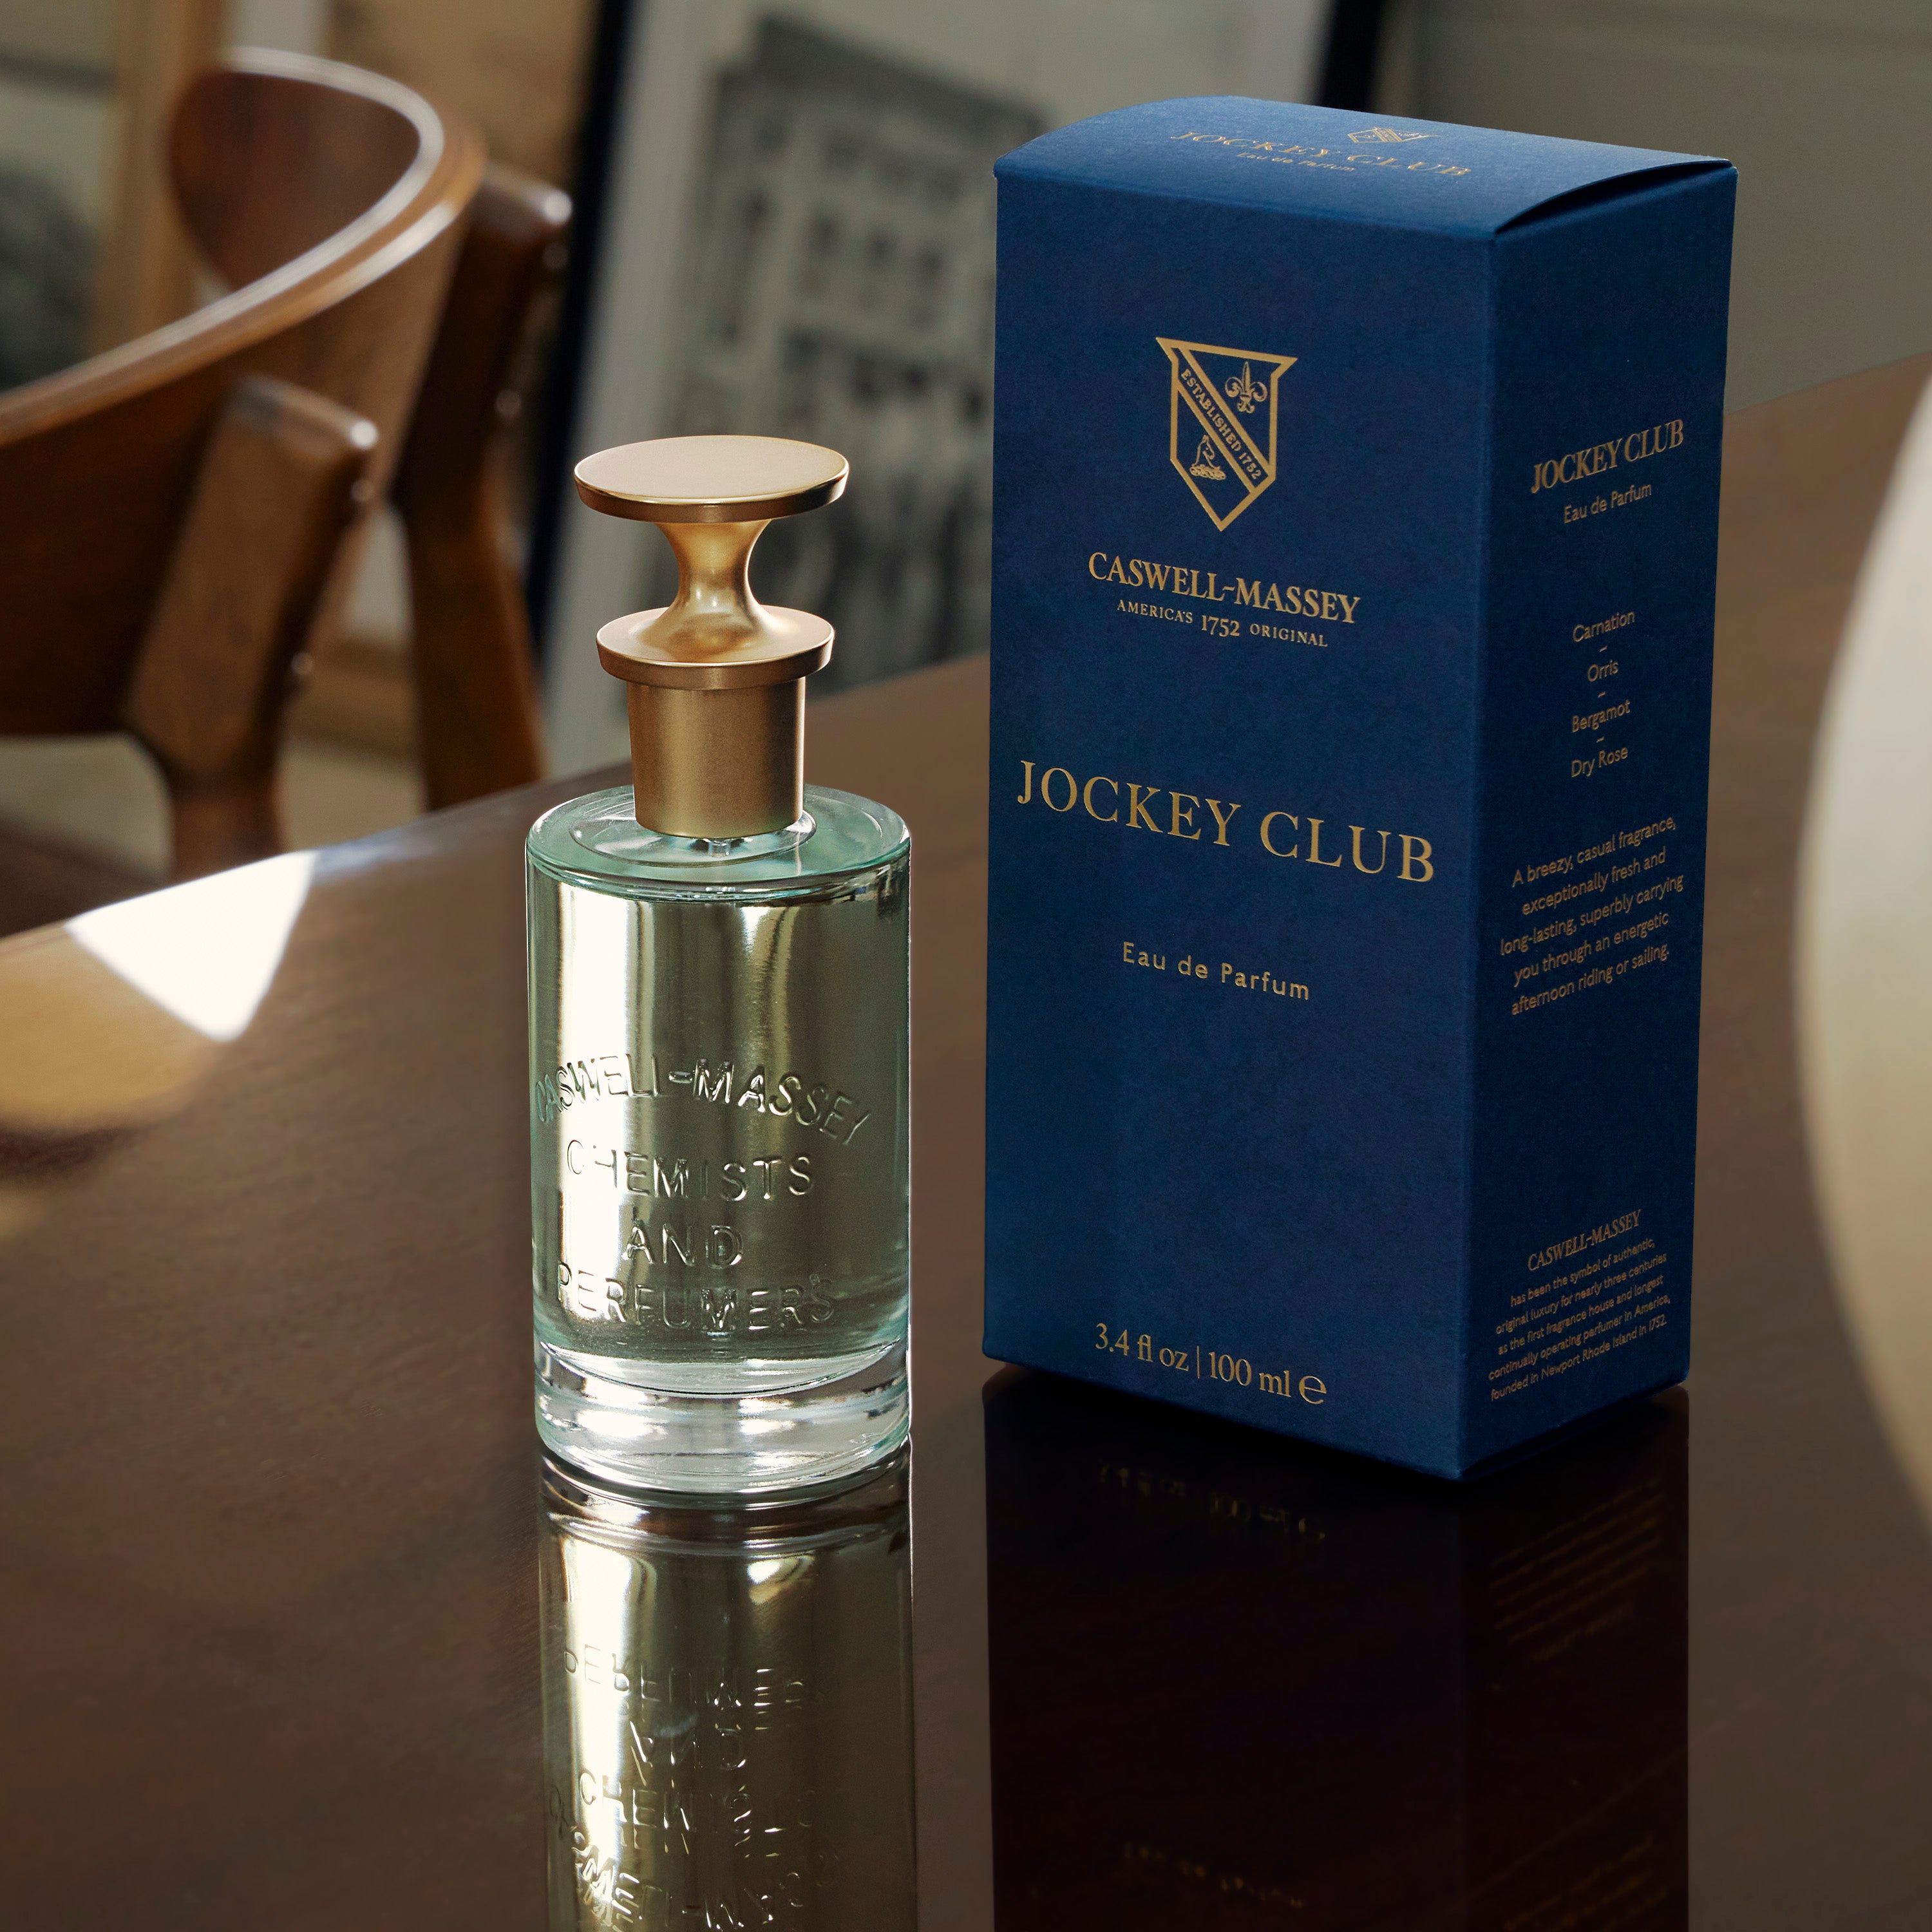 Caswell-Massey Jockey Club Eau de Parfum 100 mL fragrance bottle sitting on dark wood table